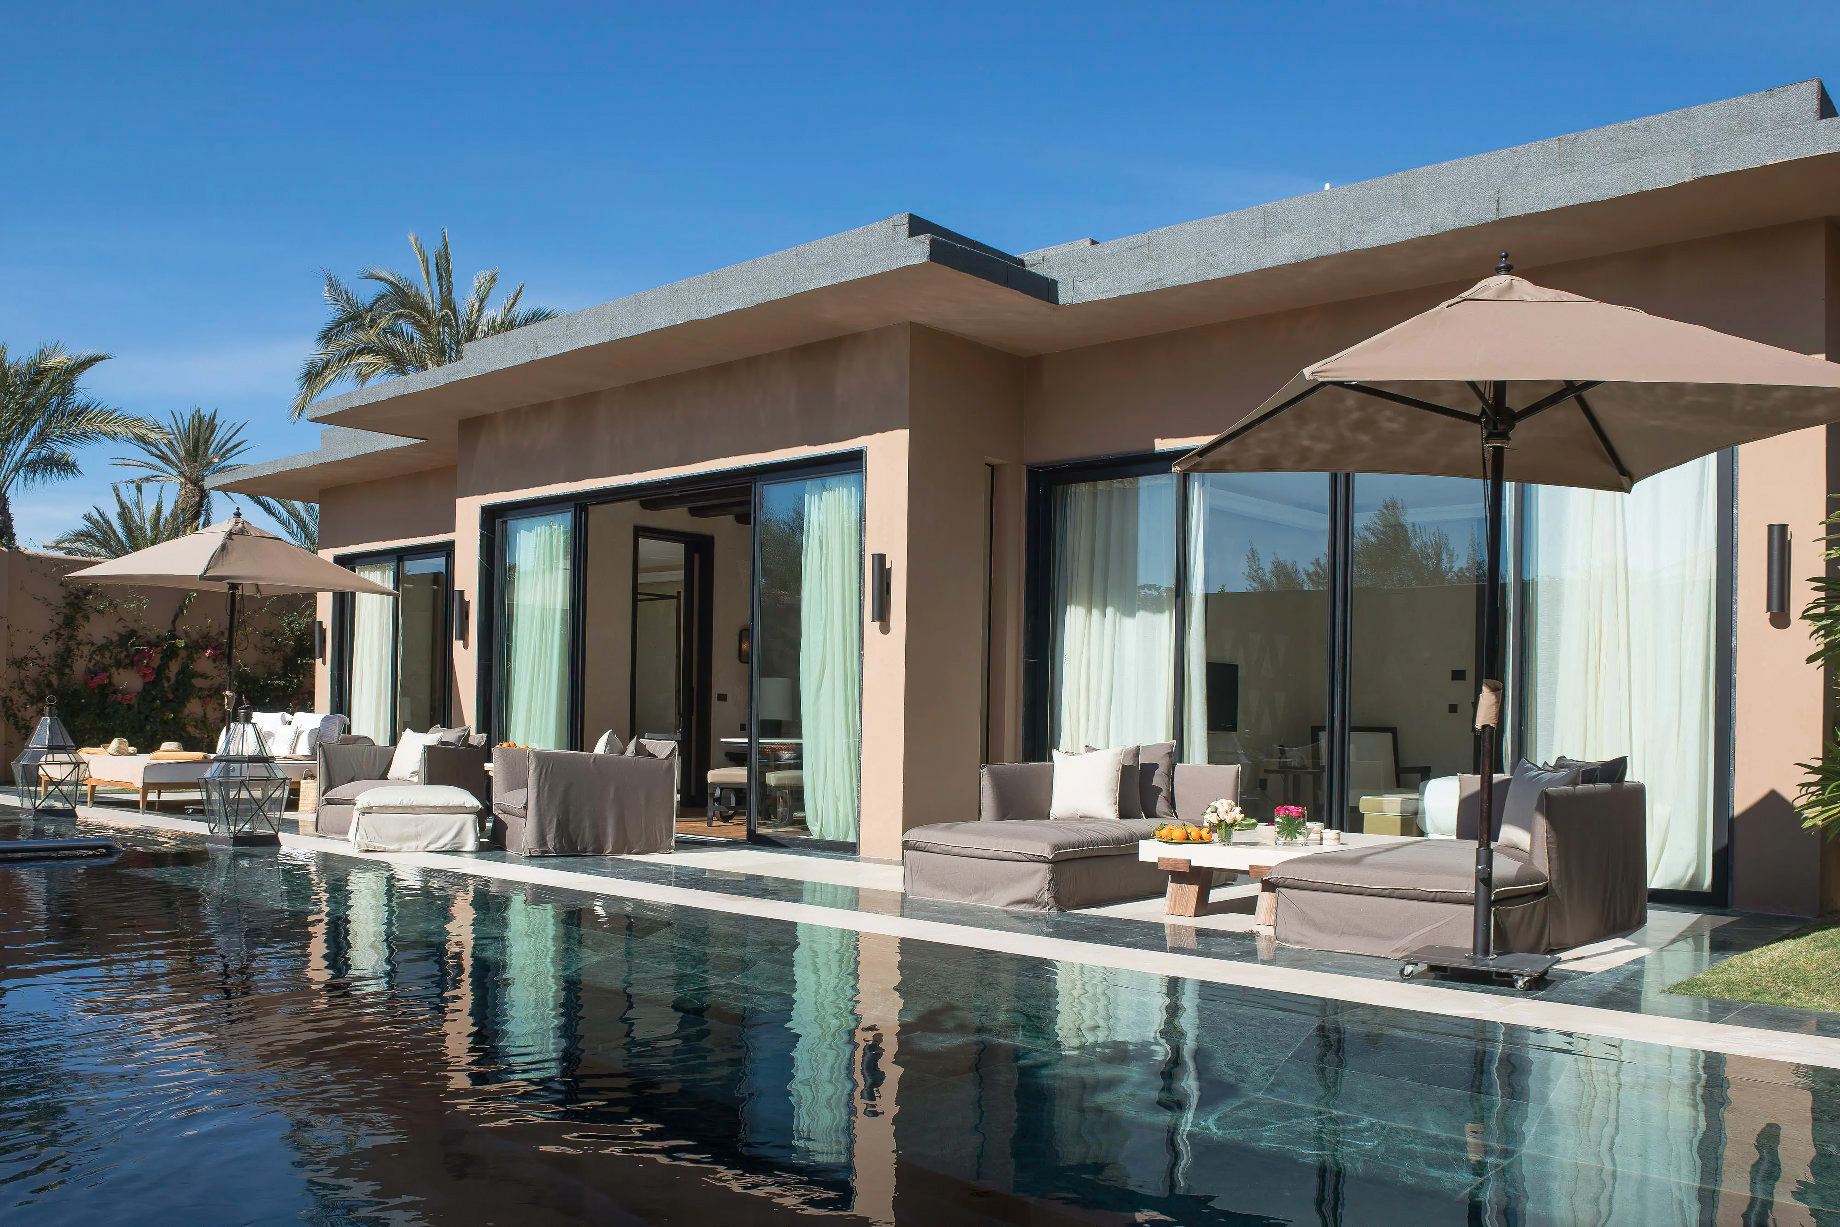 Mandarin Oriental, Marrakech Hotel – Marrakech, Morocco – Infinity Pool Suite